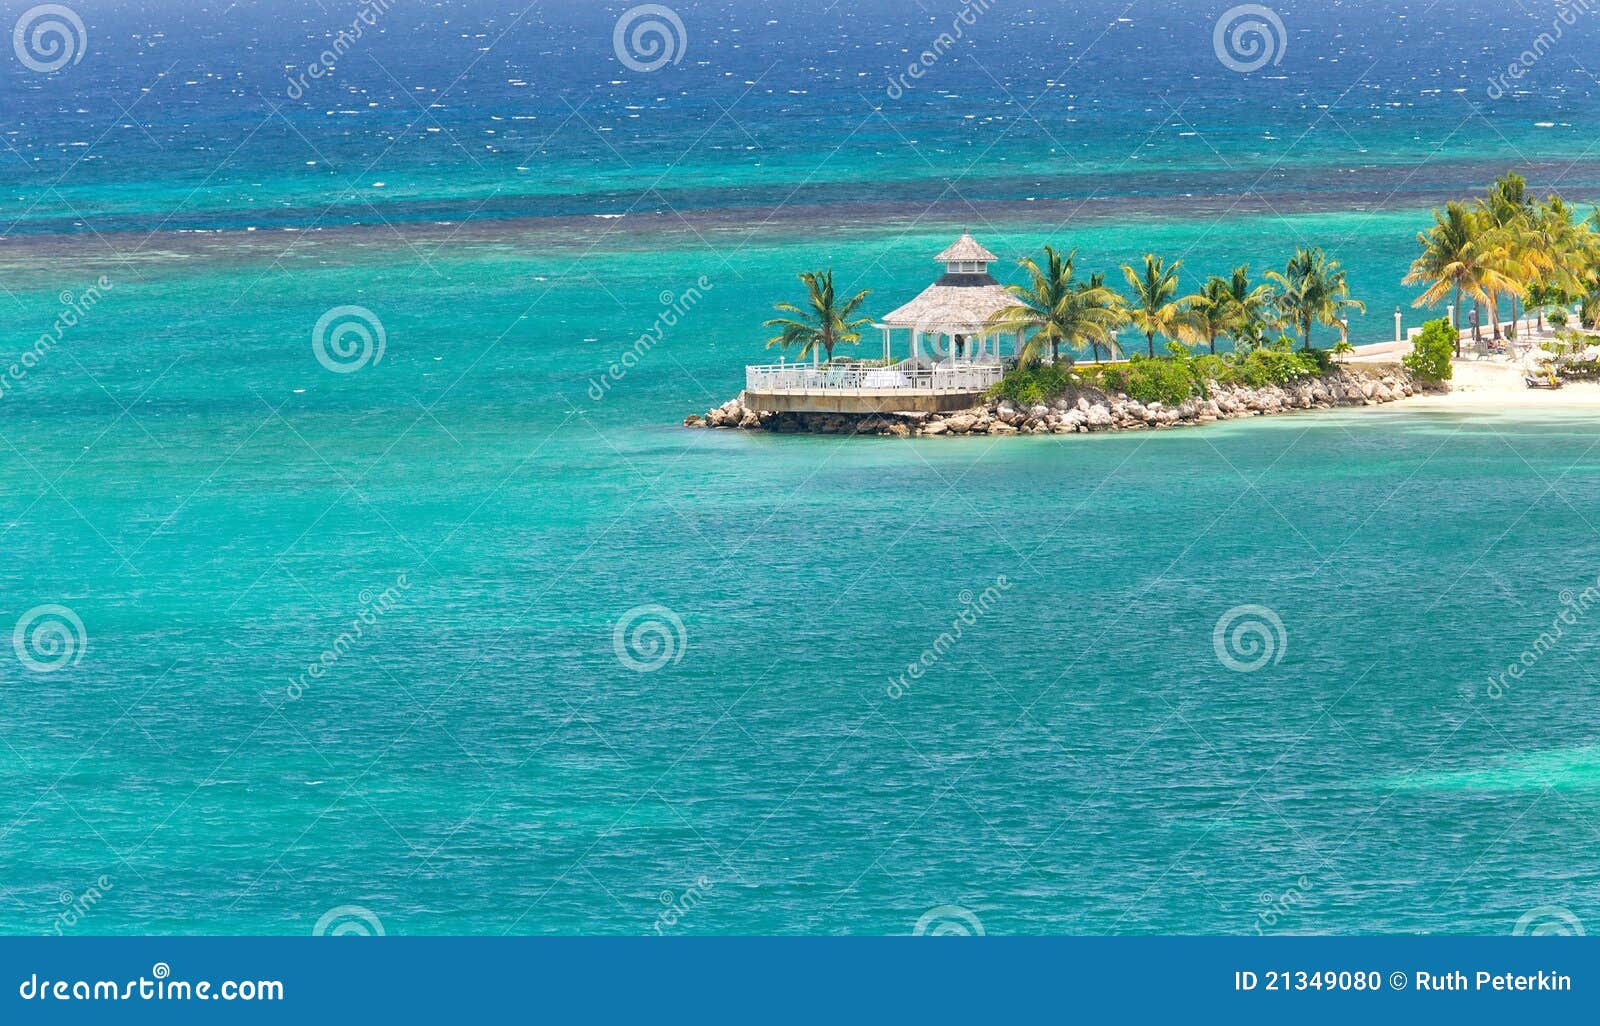 island of ocho rios, jamaica